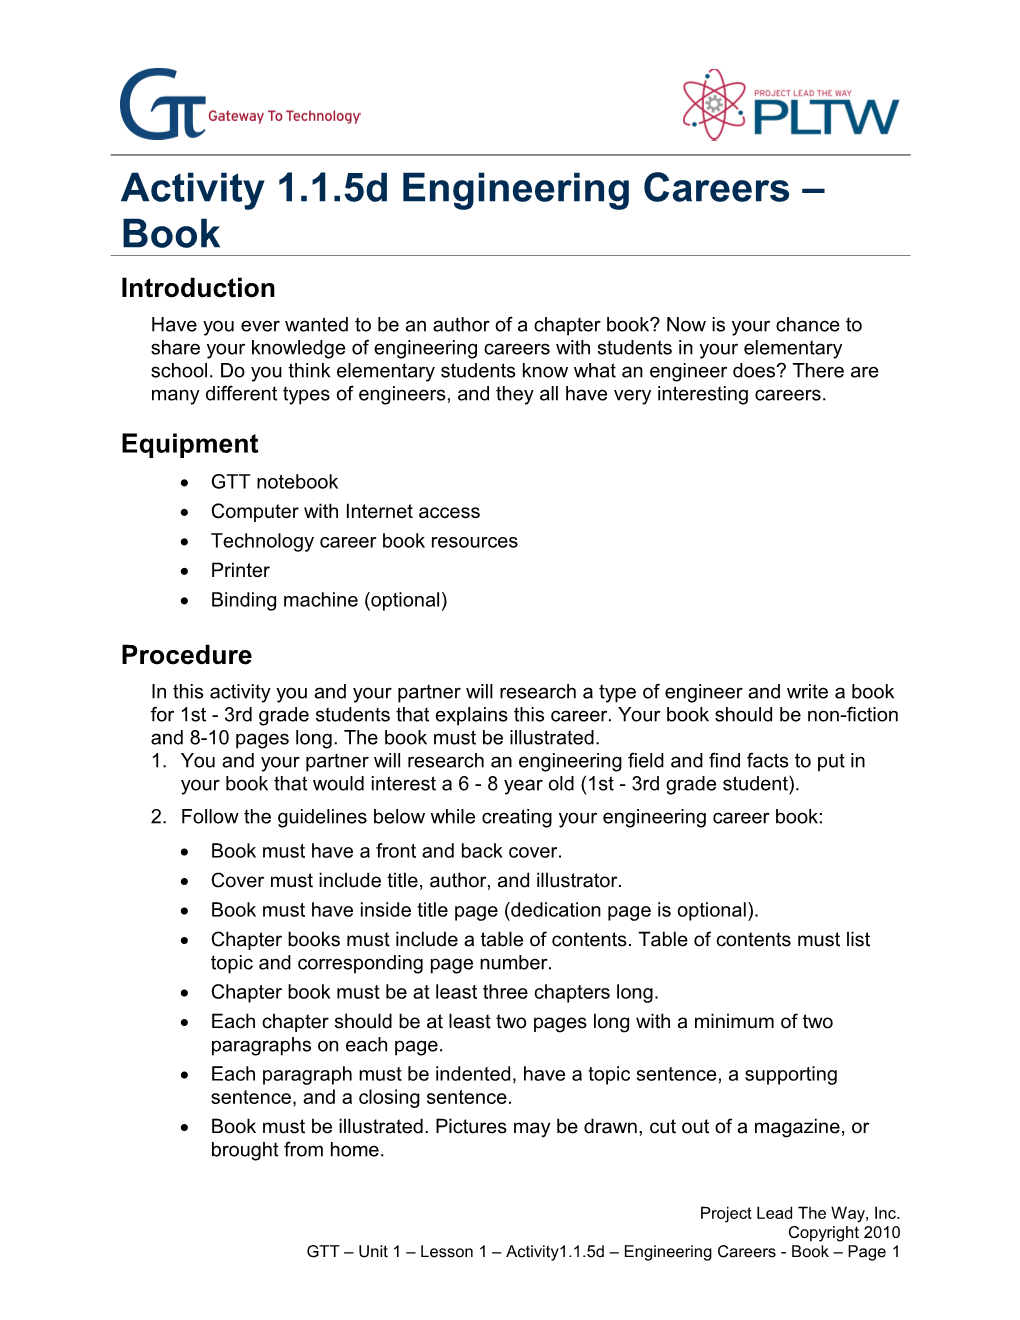 Activity 1.1.5D Engineering Careers - Book